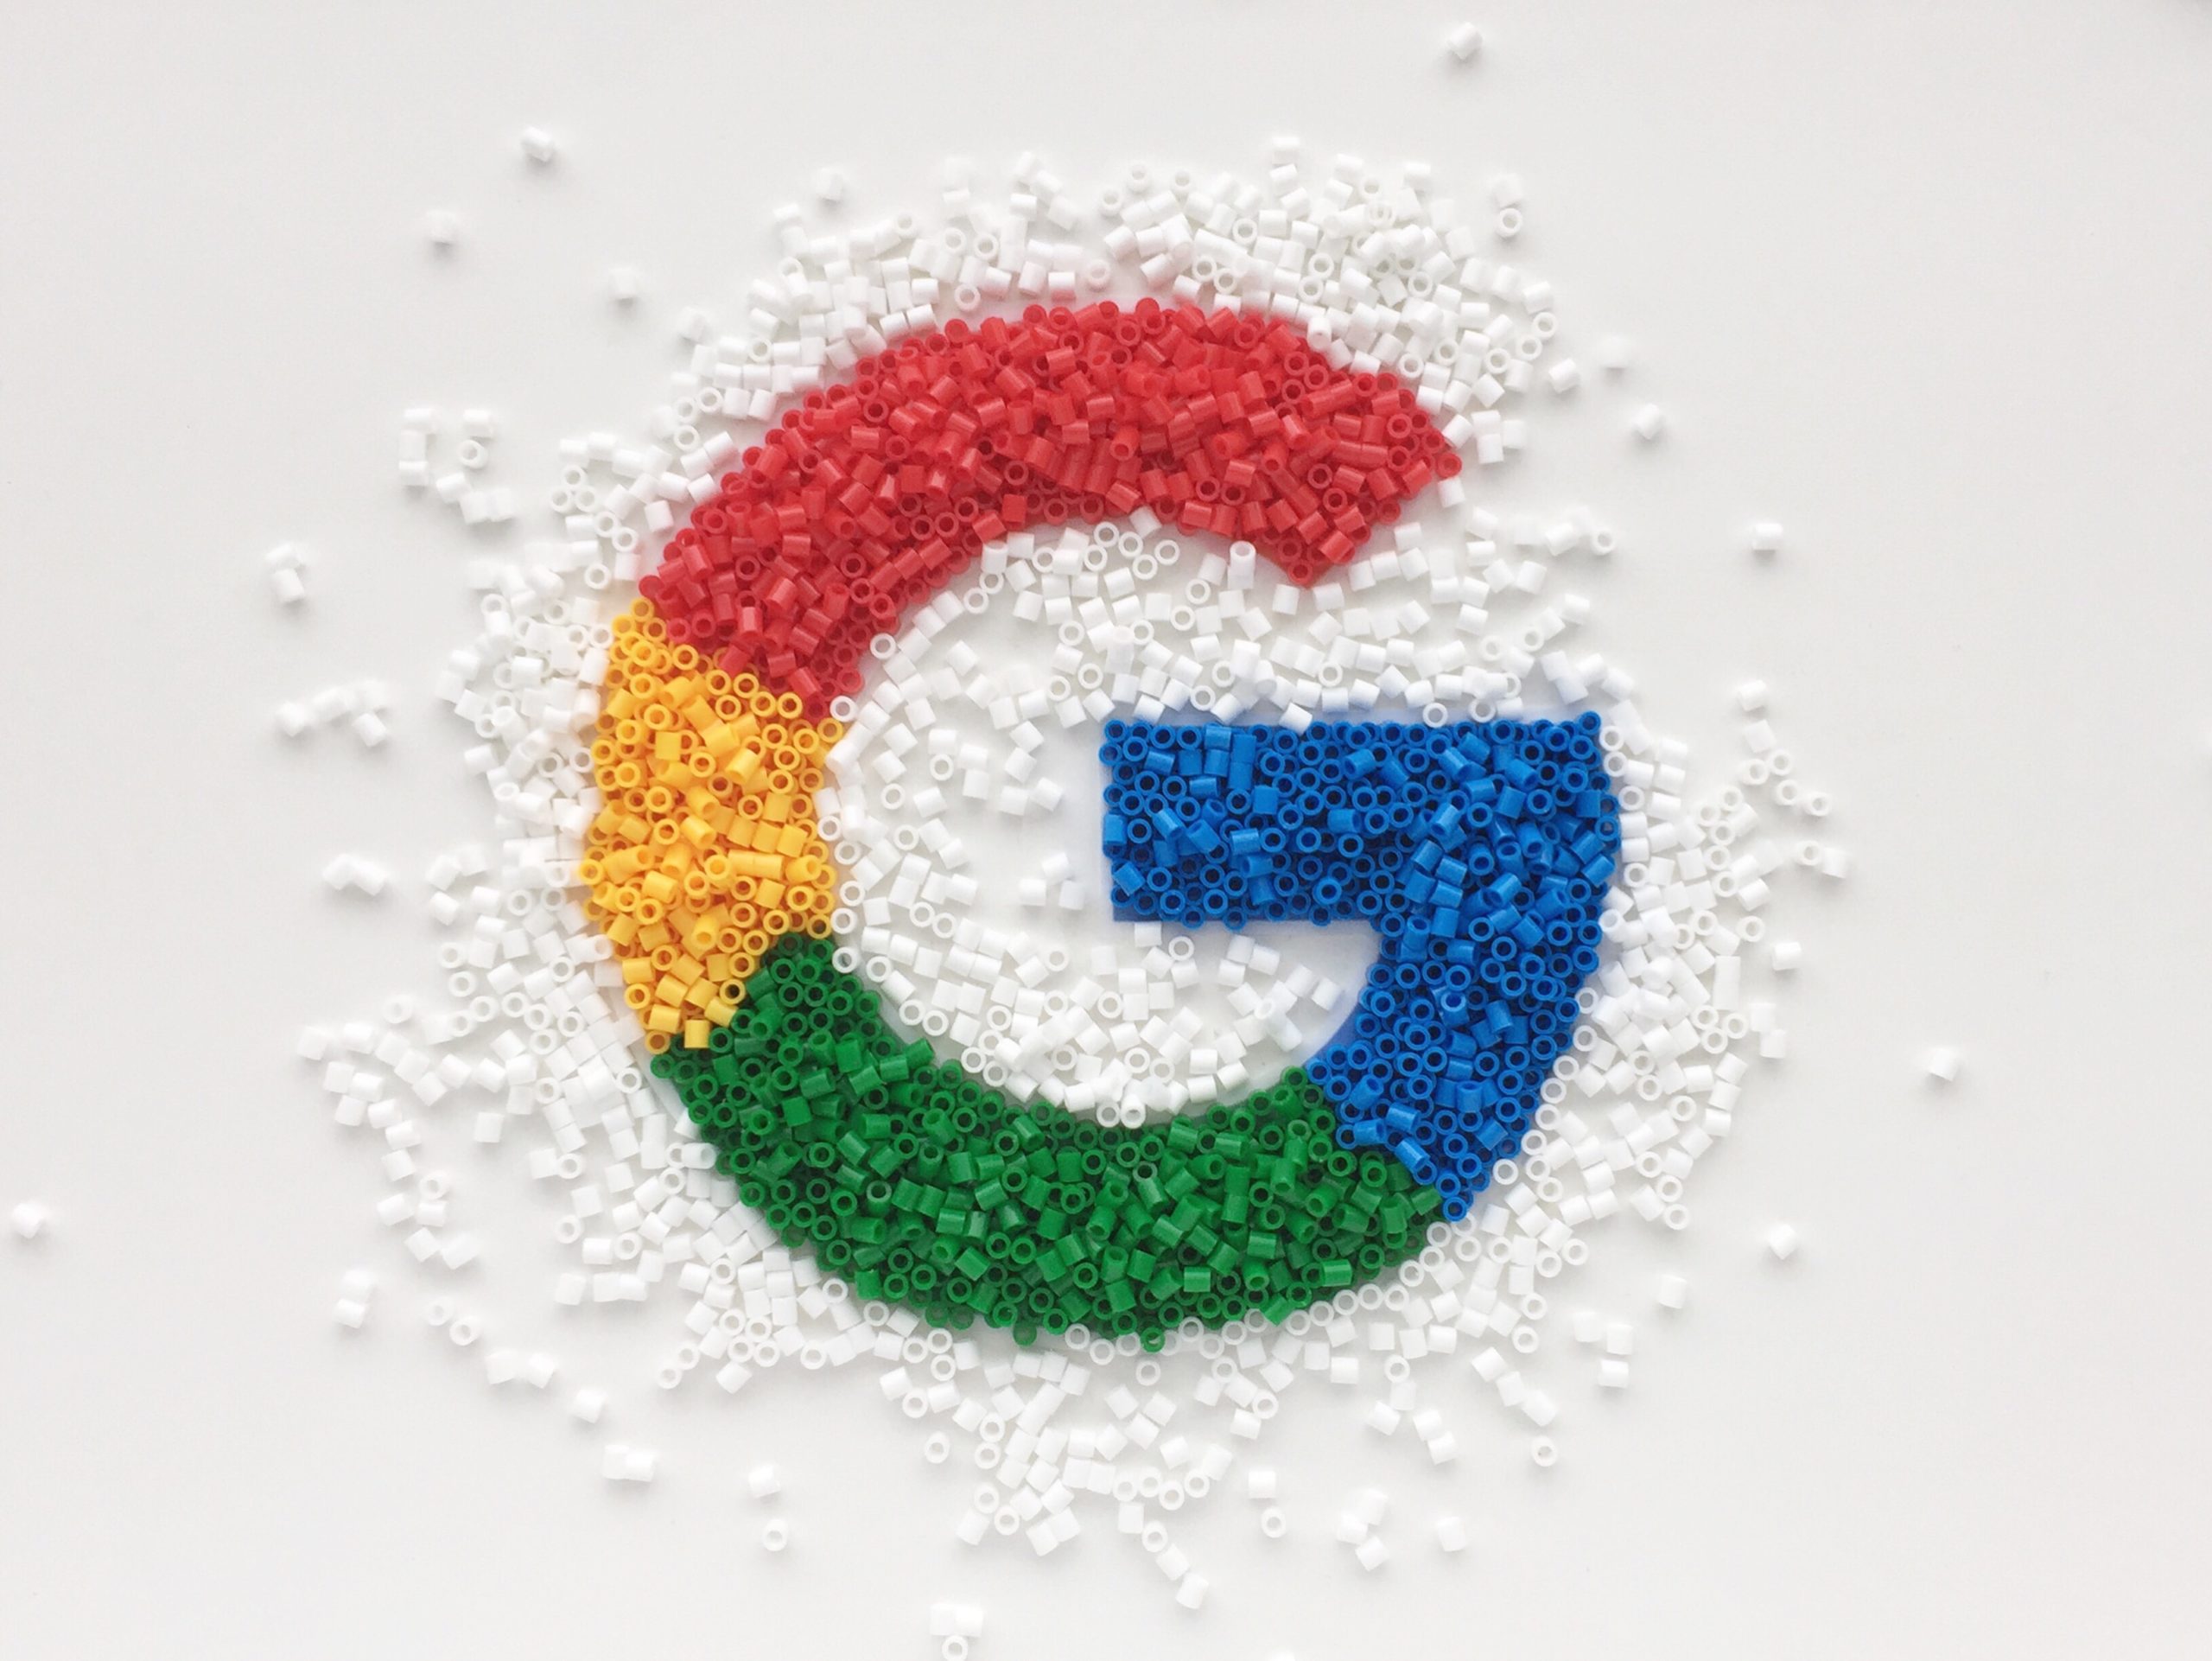 Google logo